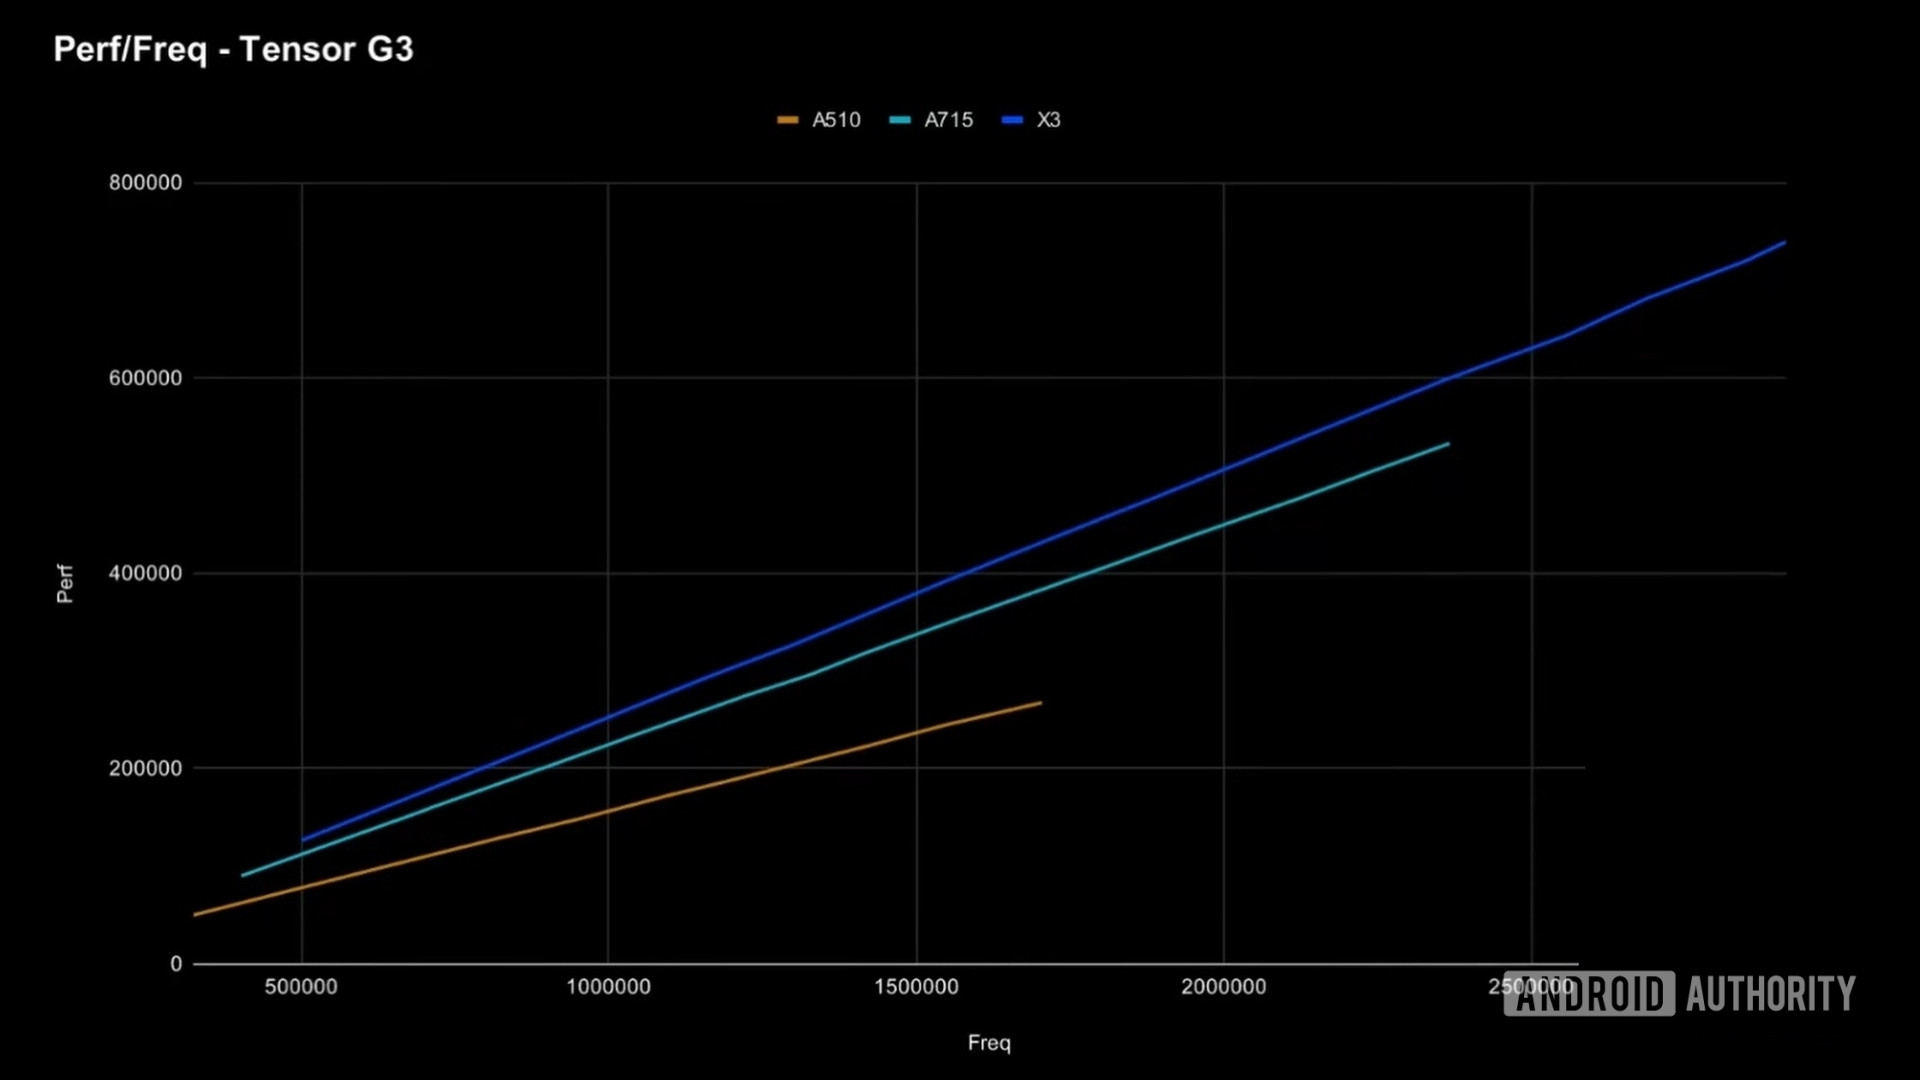 google tensor g3 performance per watt performance freq graph